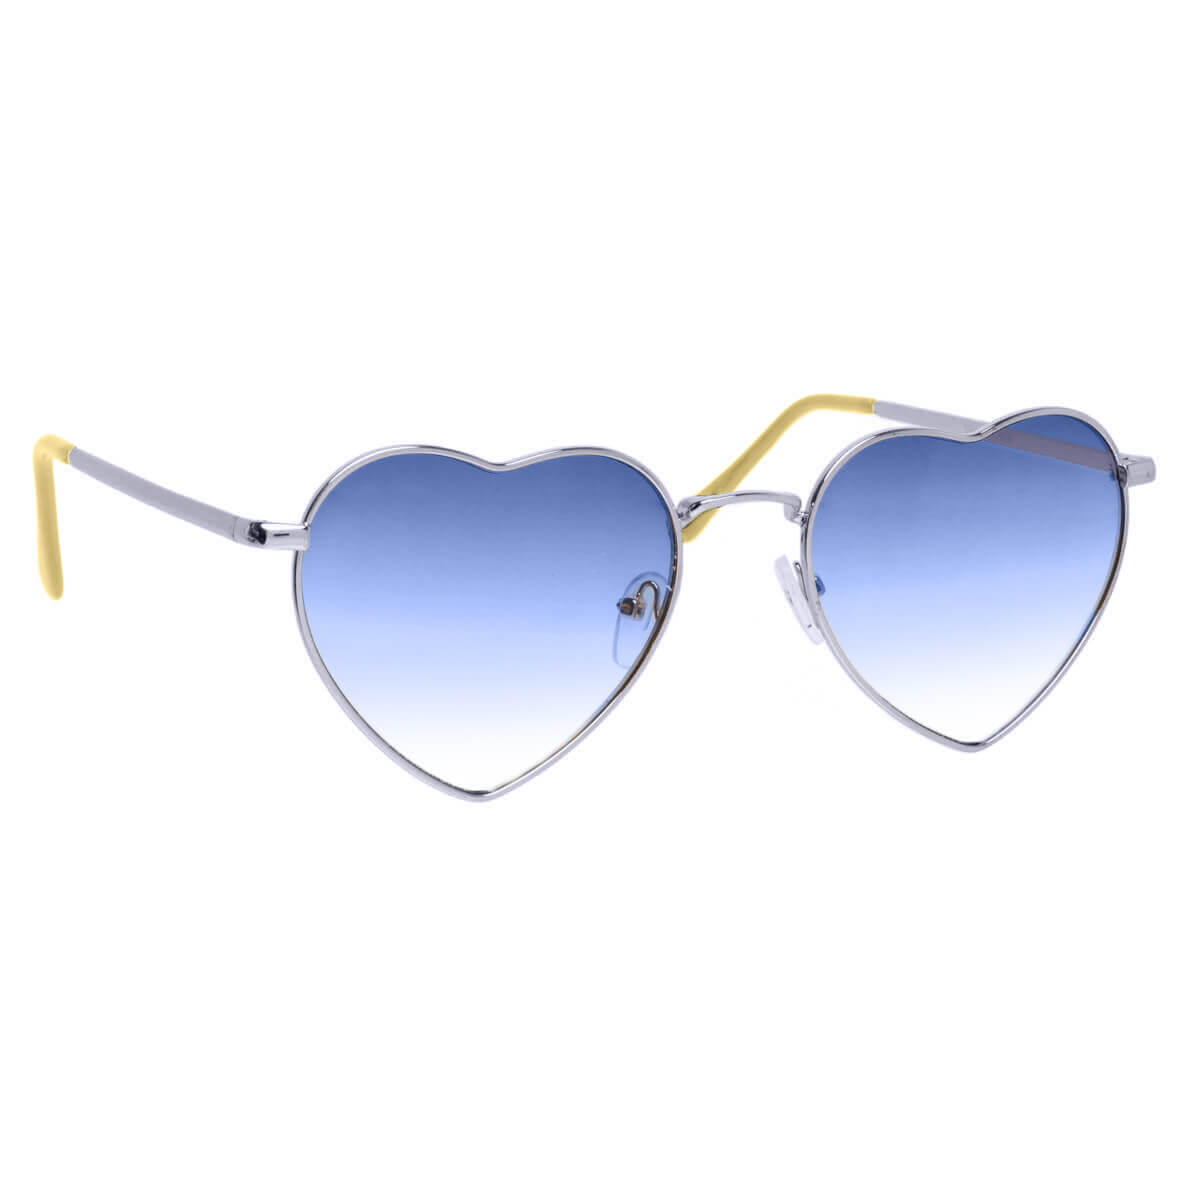 Heart sunglasses